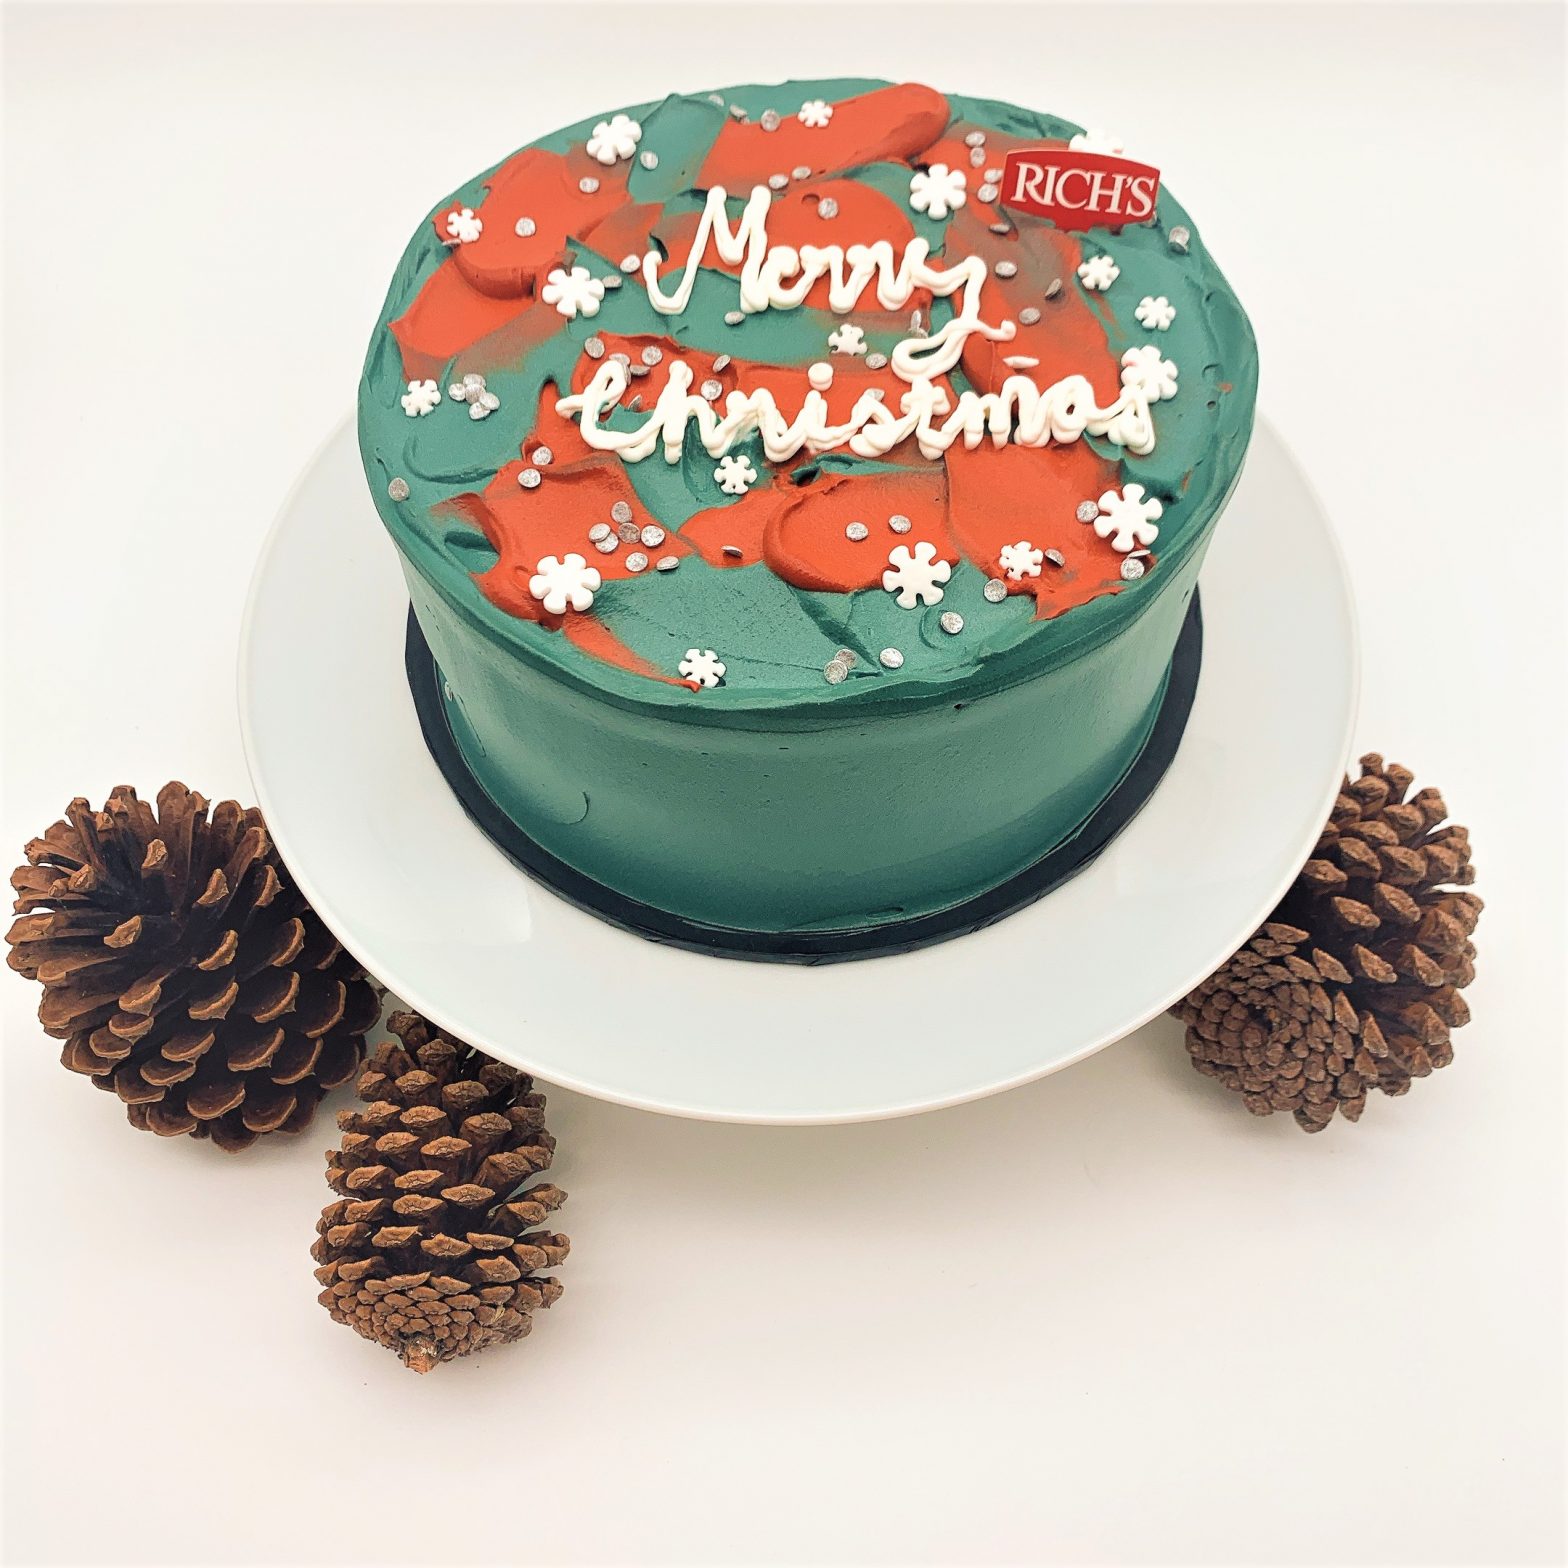 SIMPLE MERRY CHRISTMAS CAKE